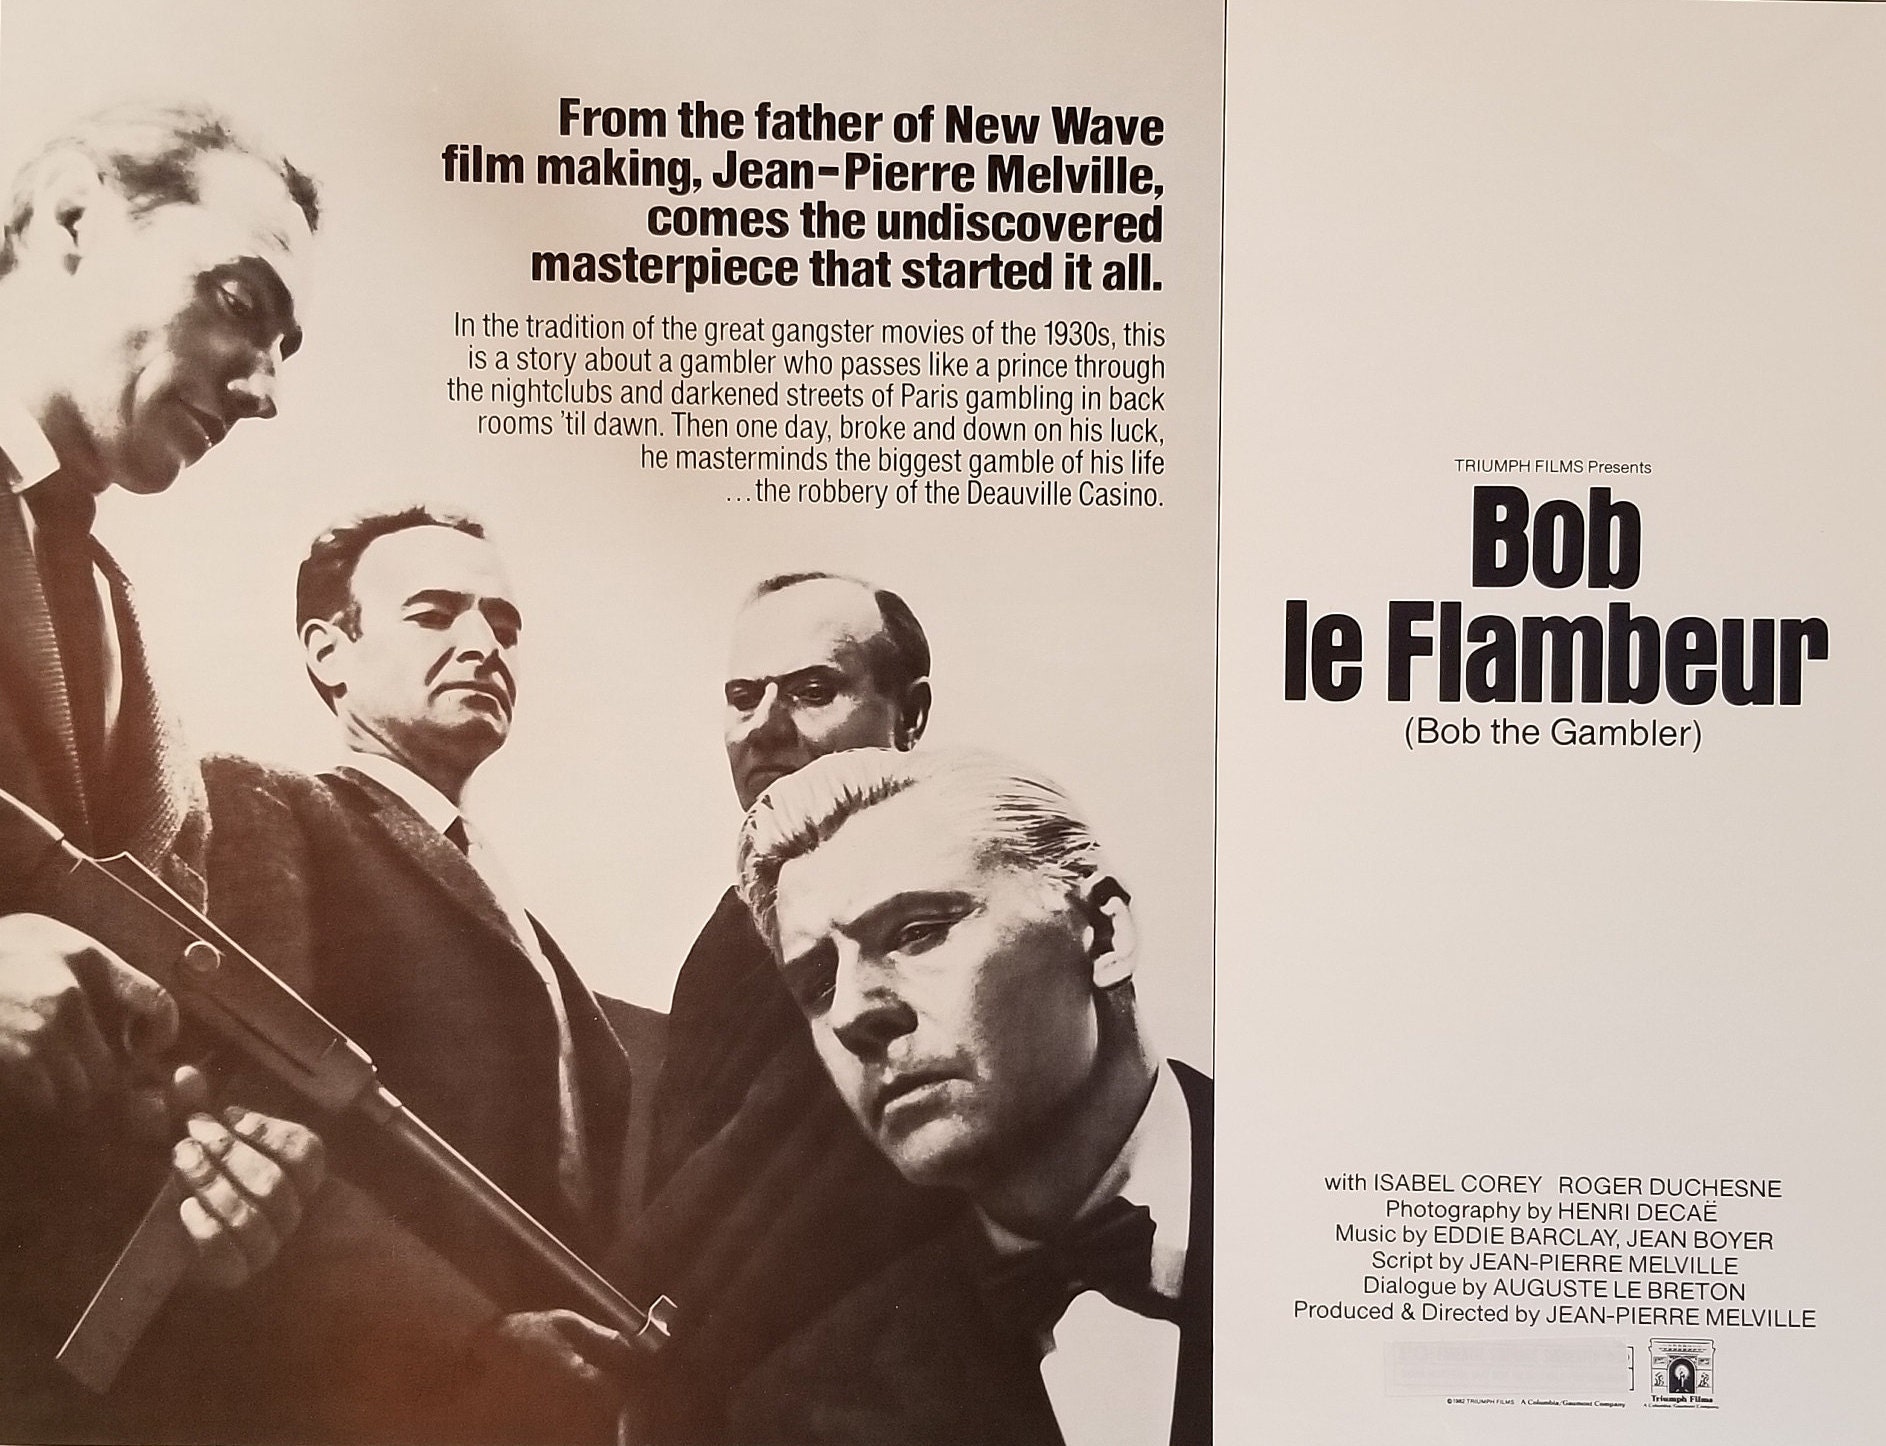 BOB LE FLAMBEUR (BOB THE GAMBLER) (France, 1956), Director: Jean-Pierre  Melville